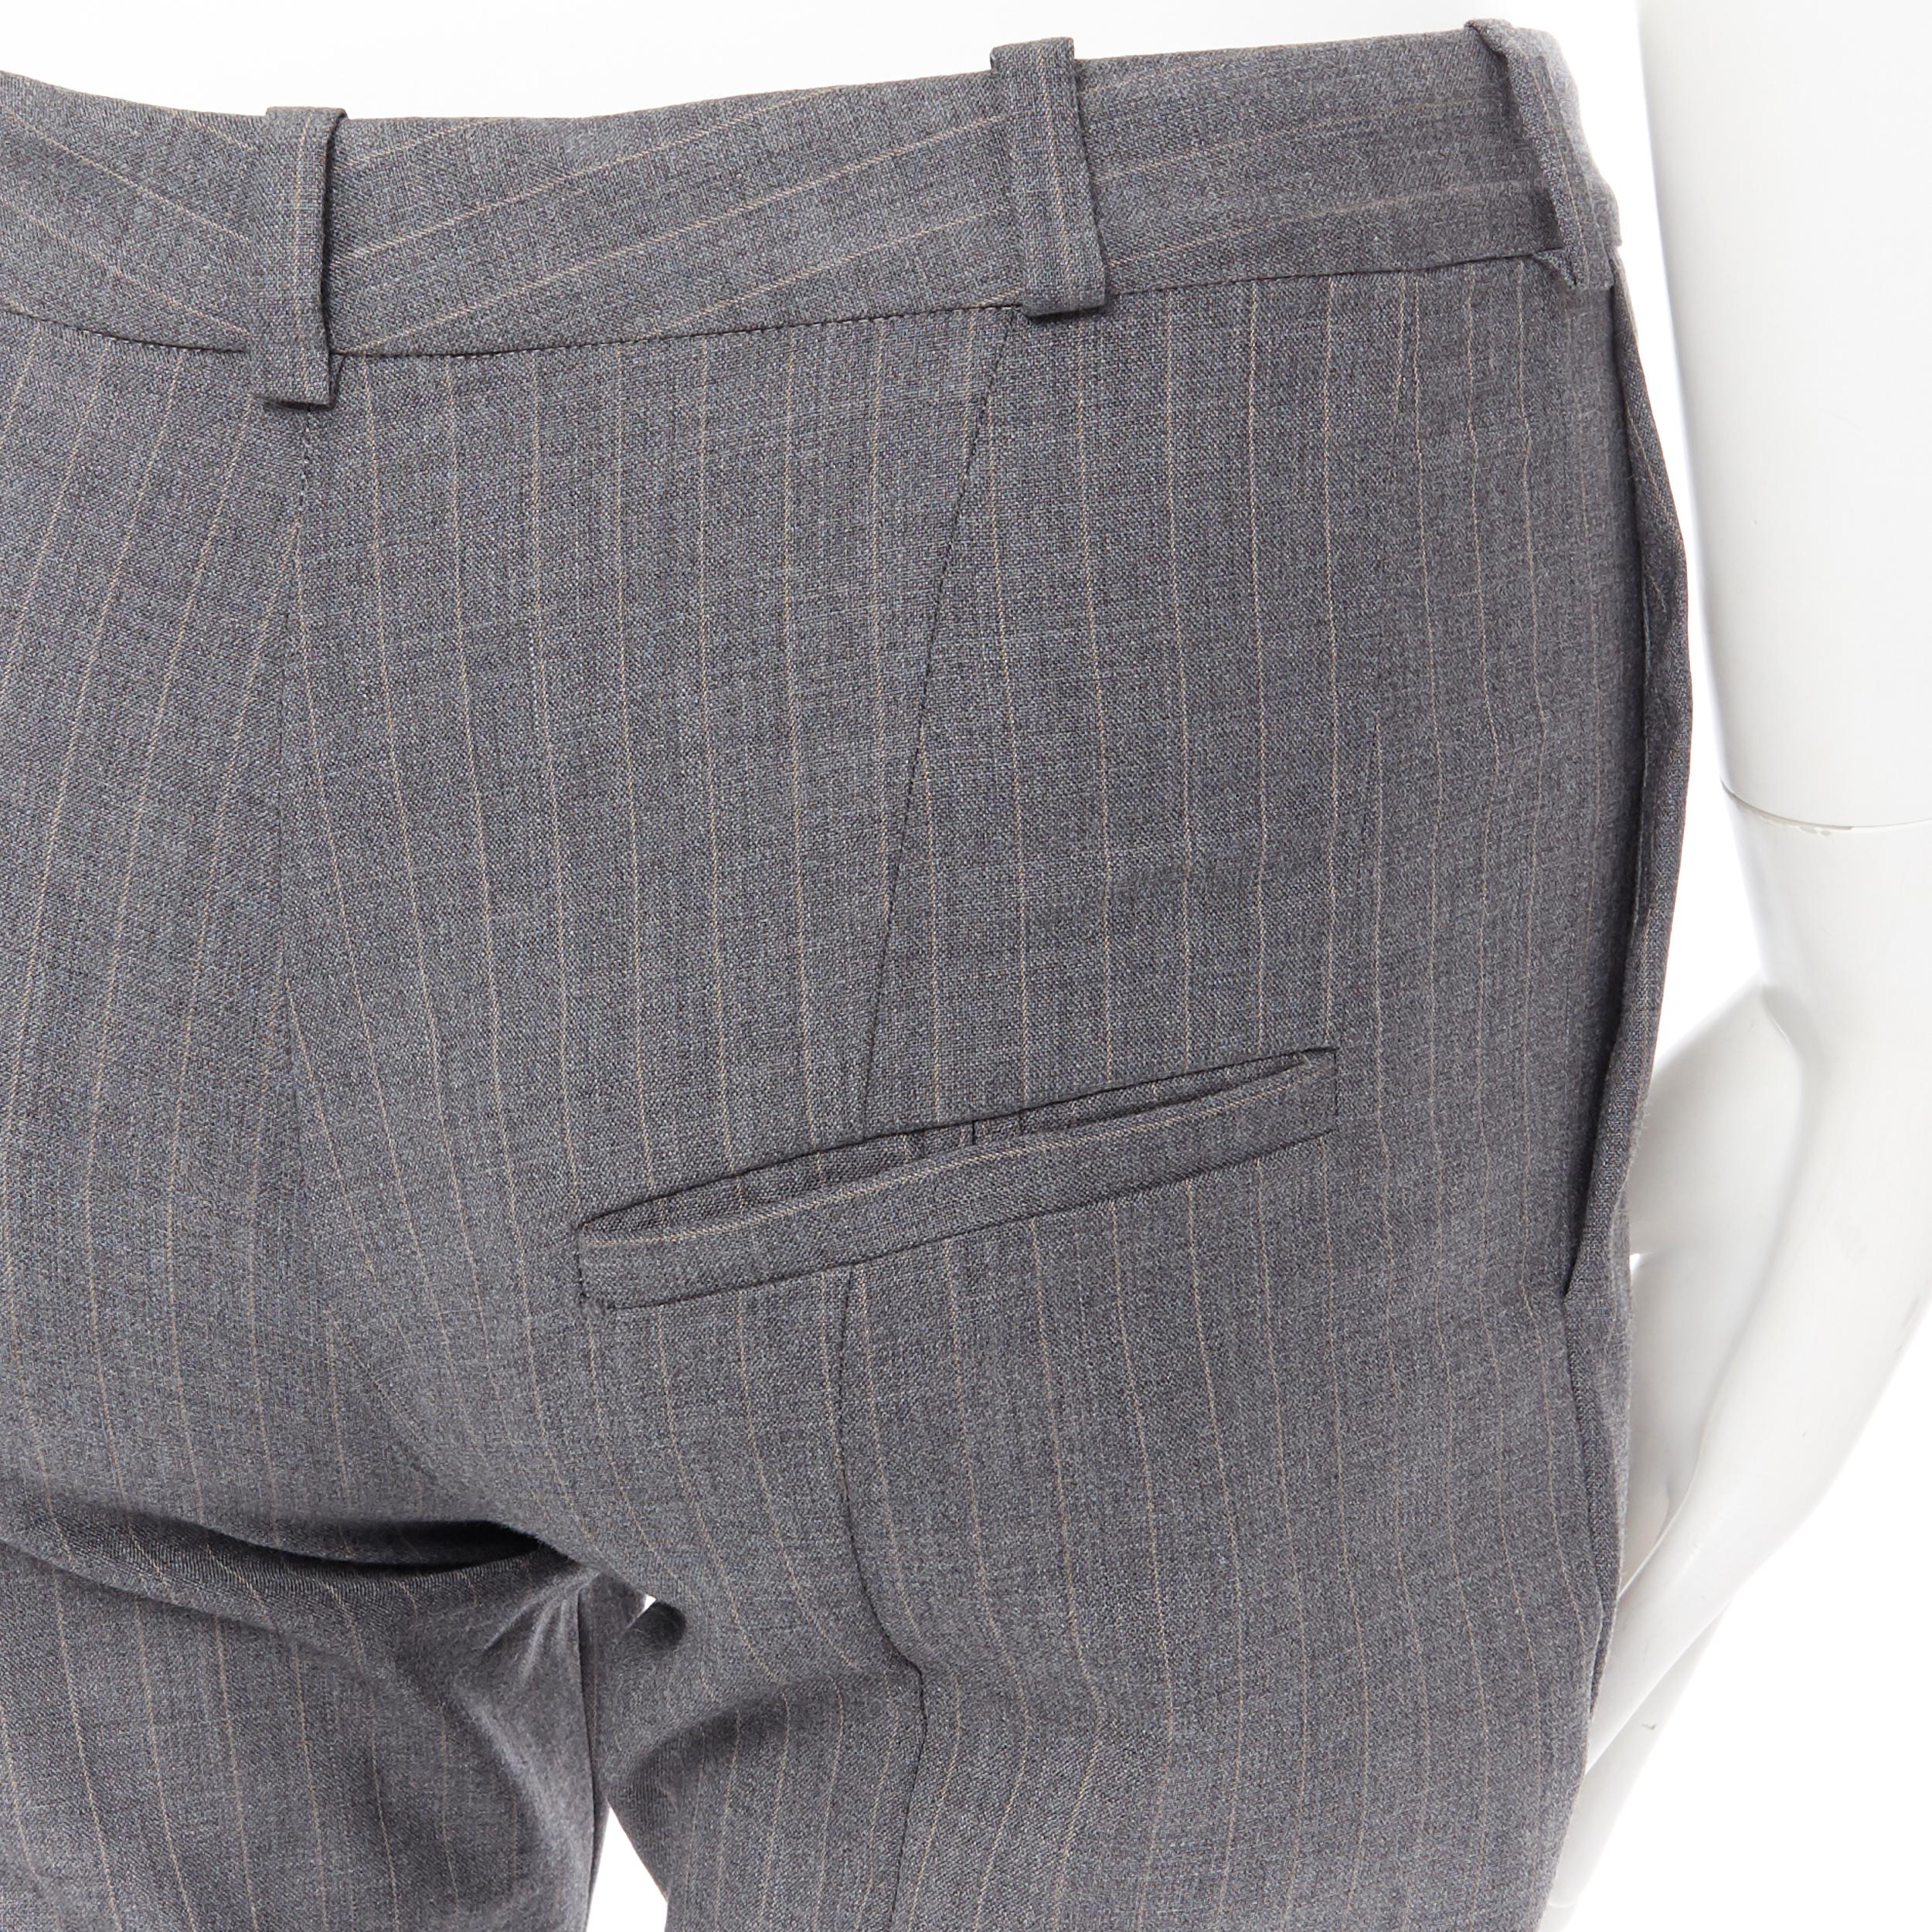 CHLOE Vintage 100% wool grey pinstripe low rise straight leg trousers pants FR34
Brand: Chloe
Model Name / Style: Pinstripe trouserse
Material: Wool
Color: Grey
Pattern: Striped
Closure: Zip
Extra Detail: Concealed hook bar zip fly closure. Dual